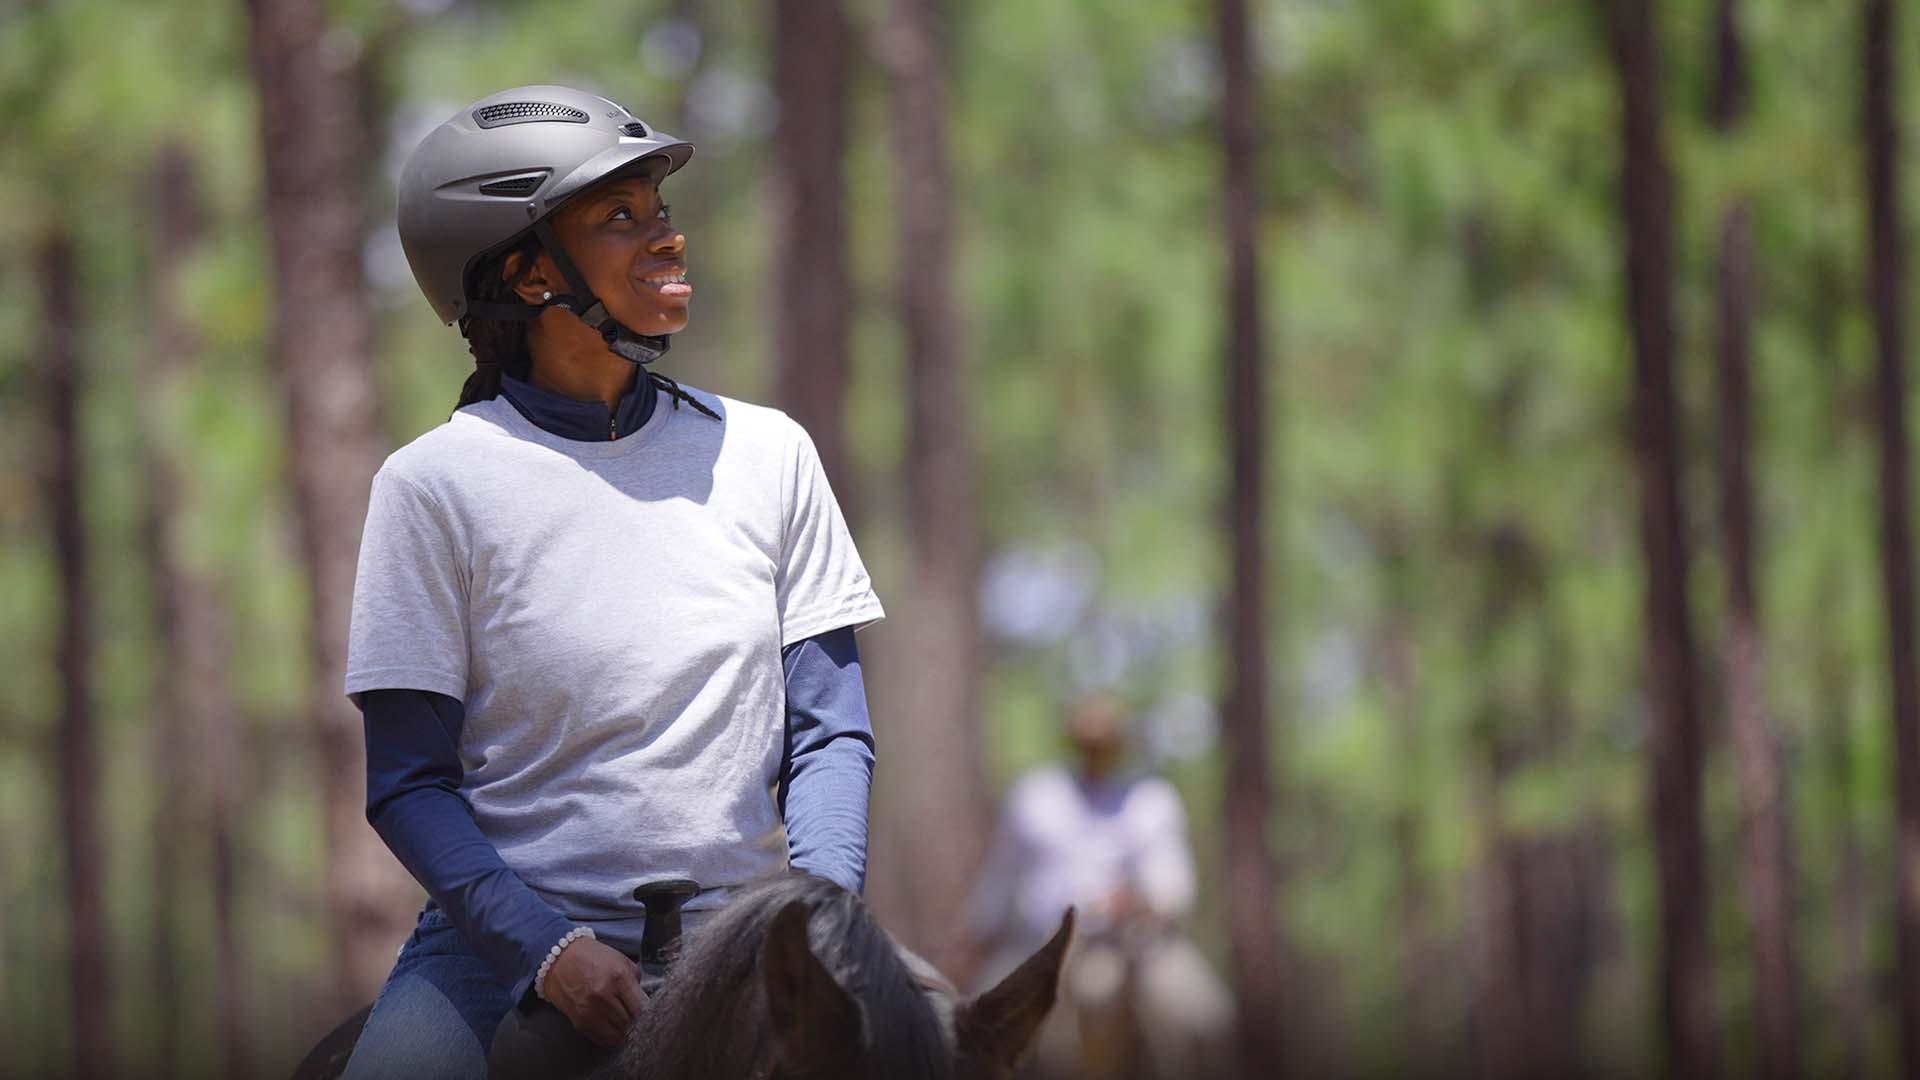 Caitlin Gooch with a helmet on riding on a horse through the woods.